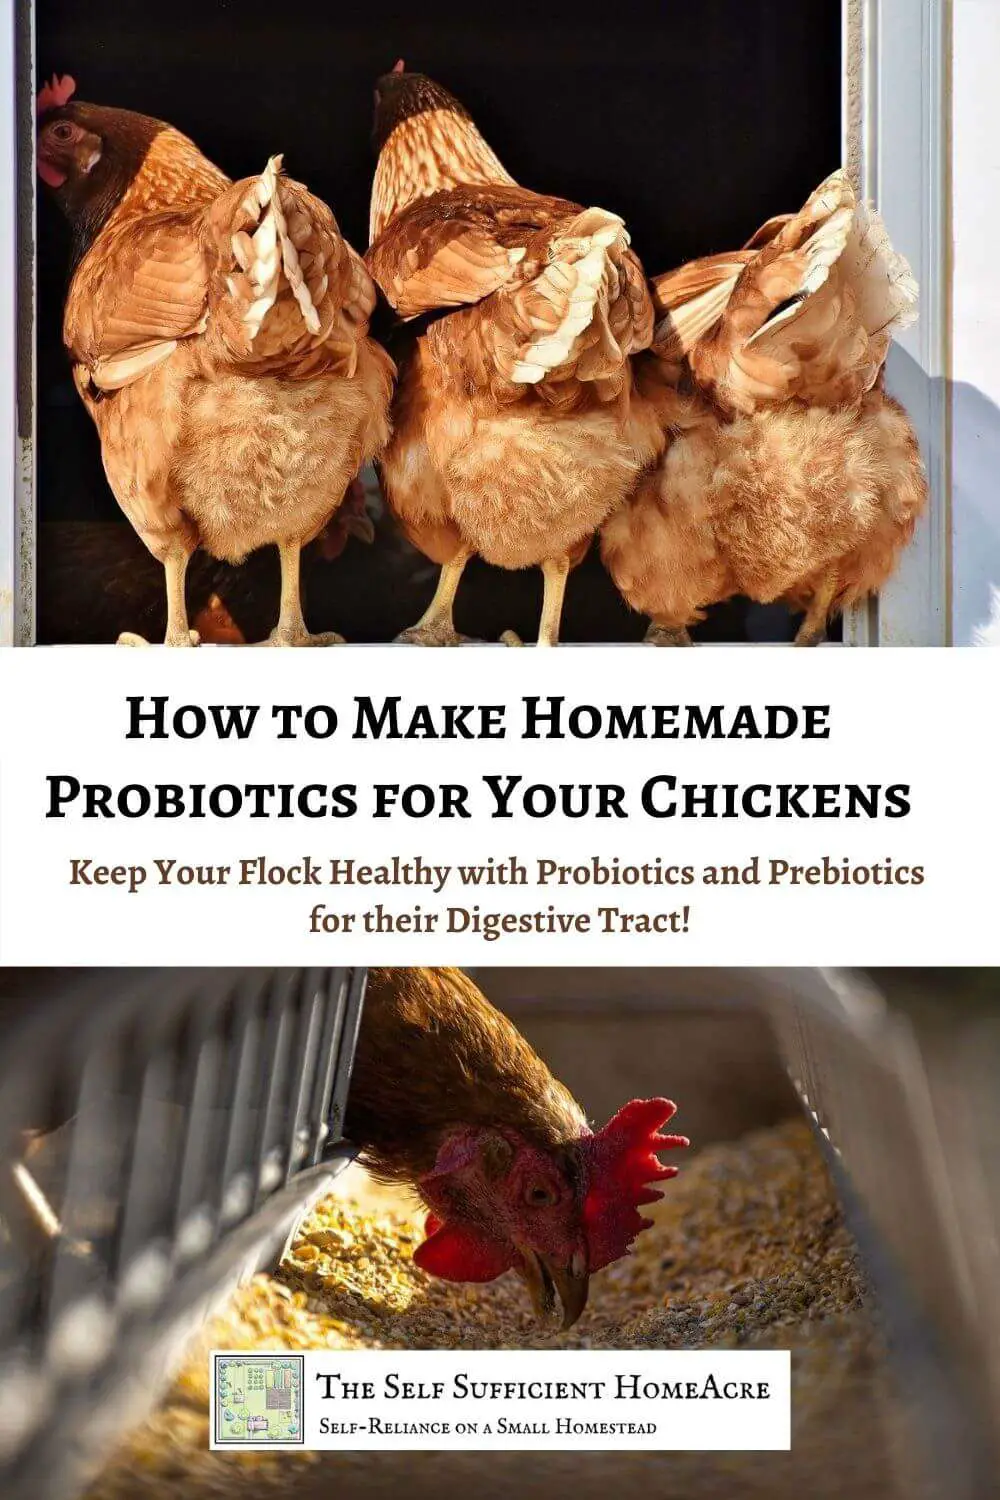 How to Make Homemade Probiotics for Chickens